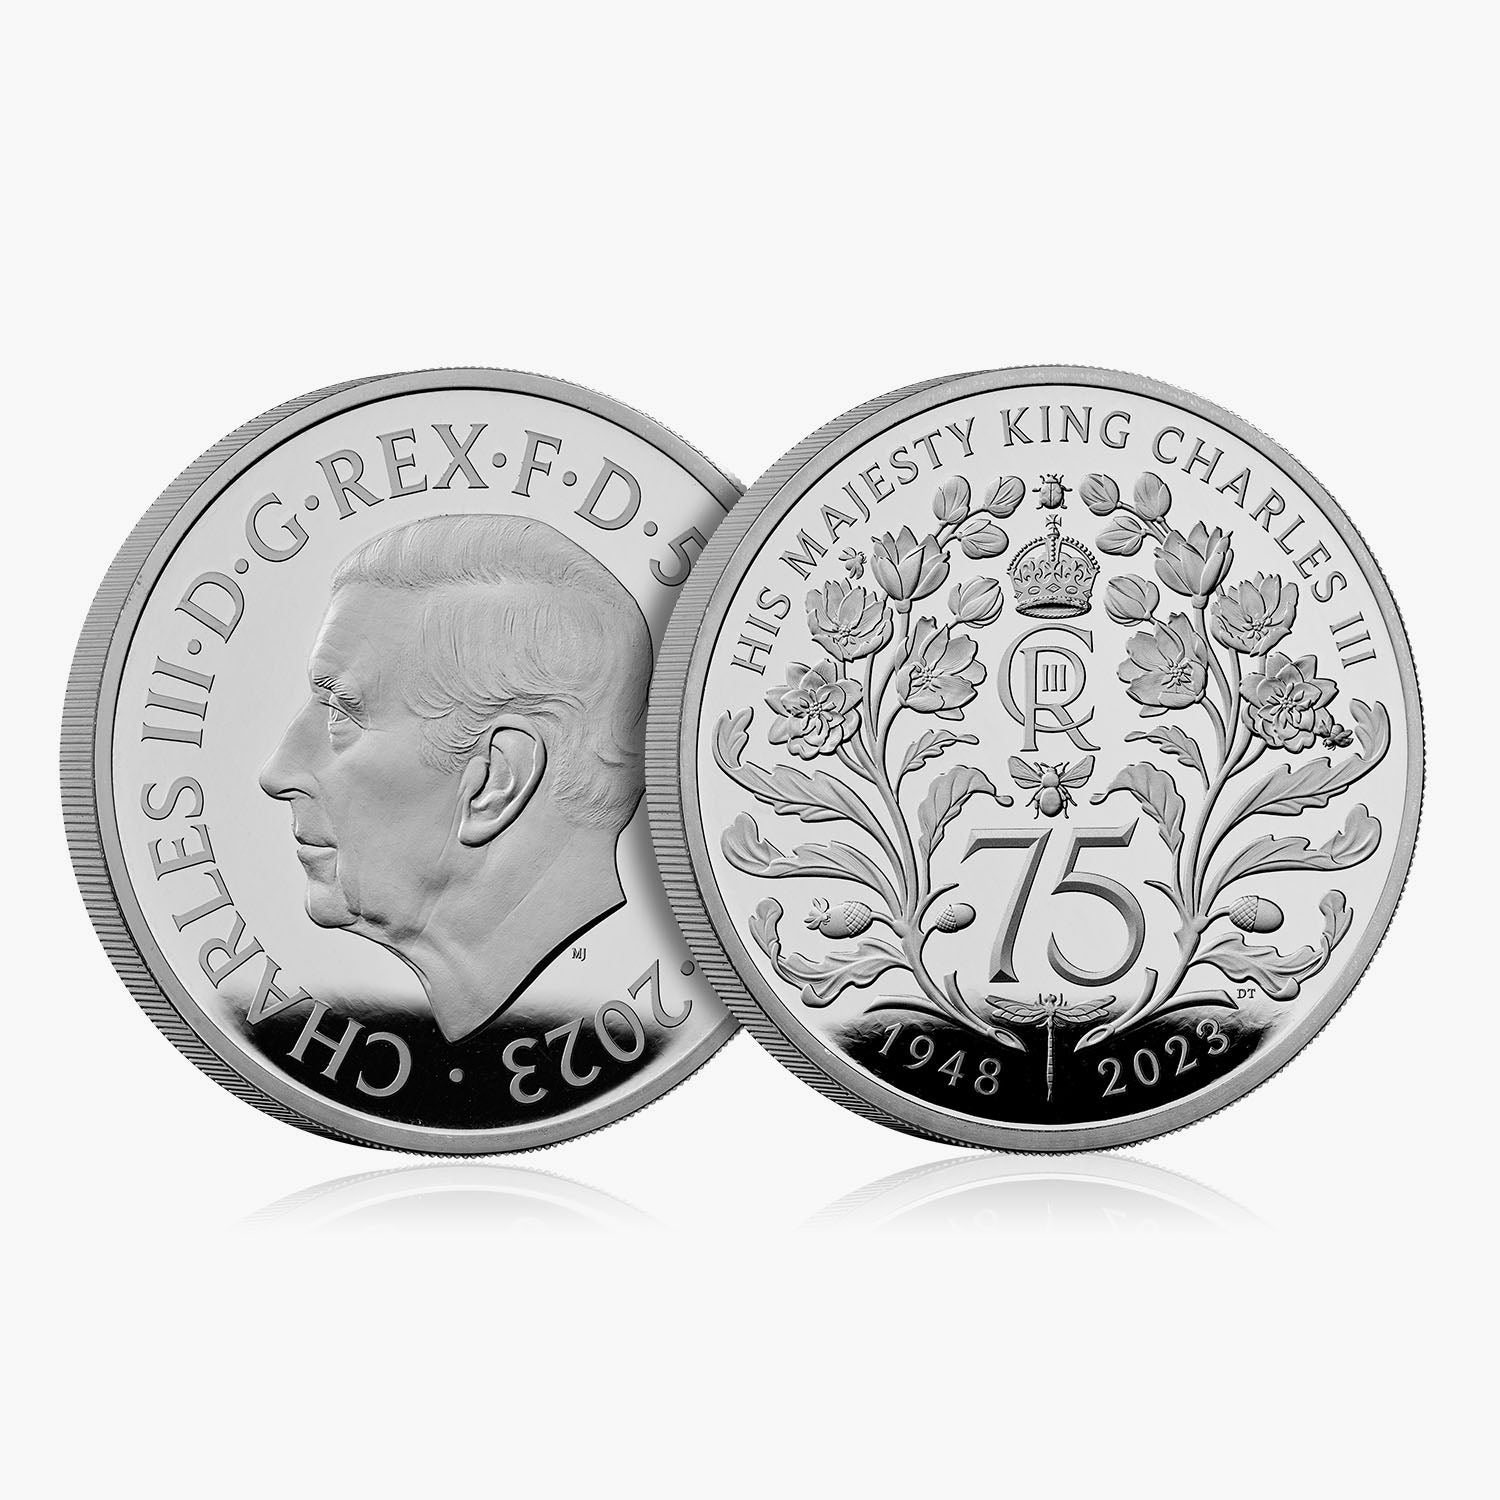 The 2023 United Kingdom Premium Proof Annual Coin Set